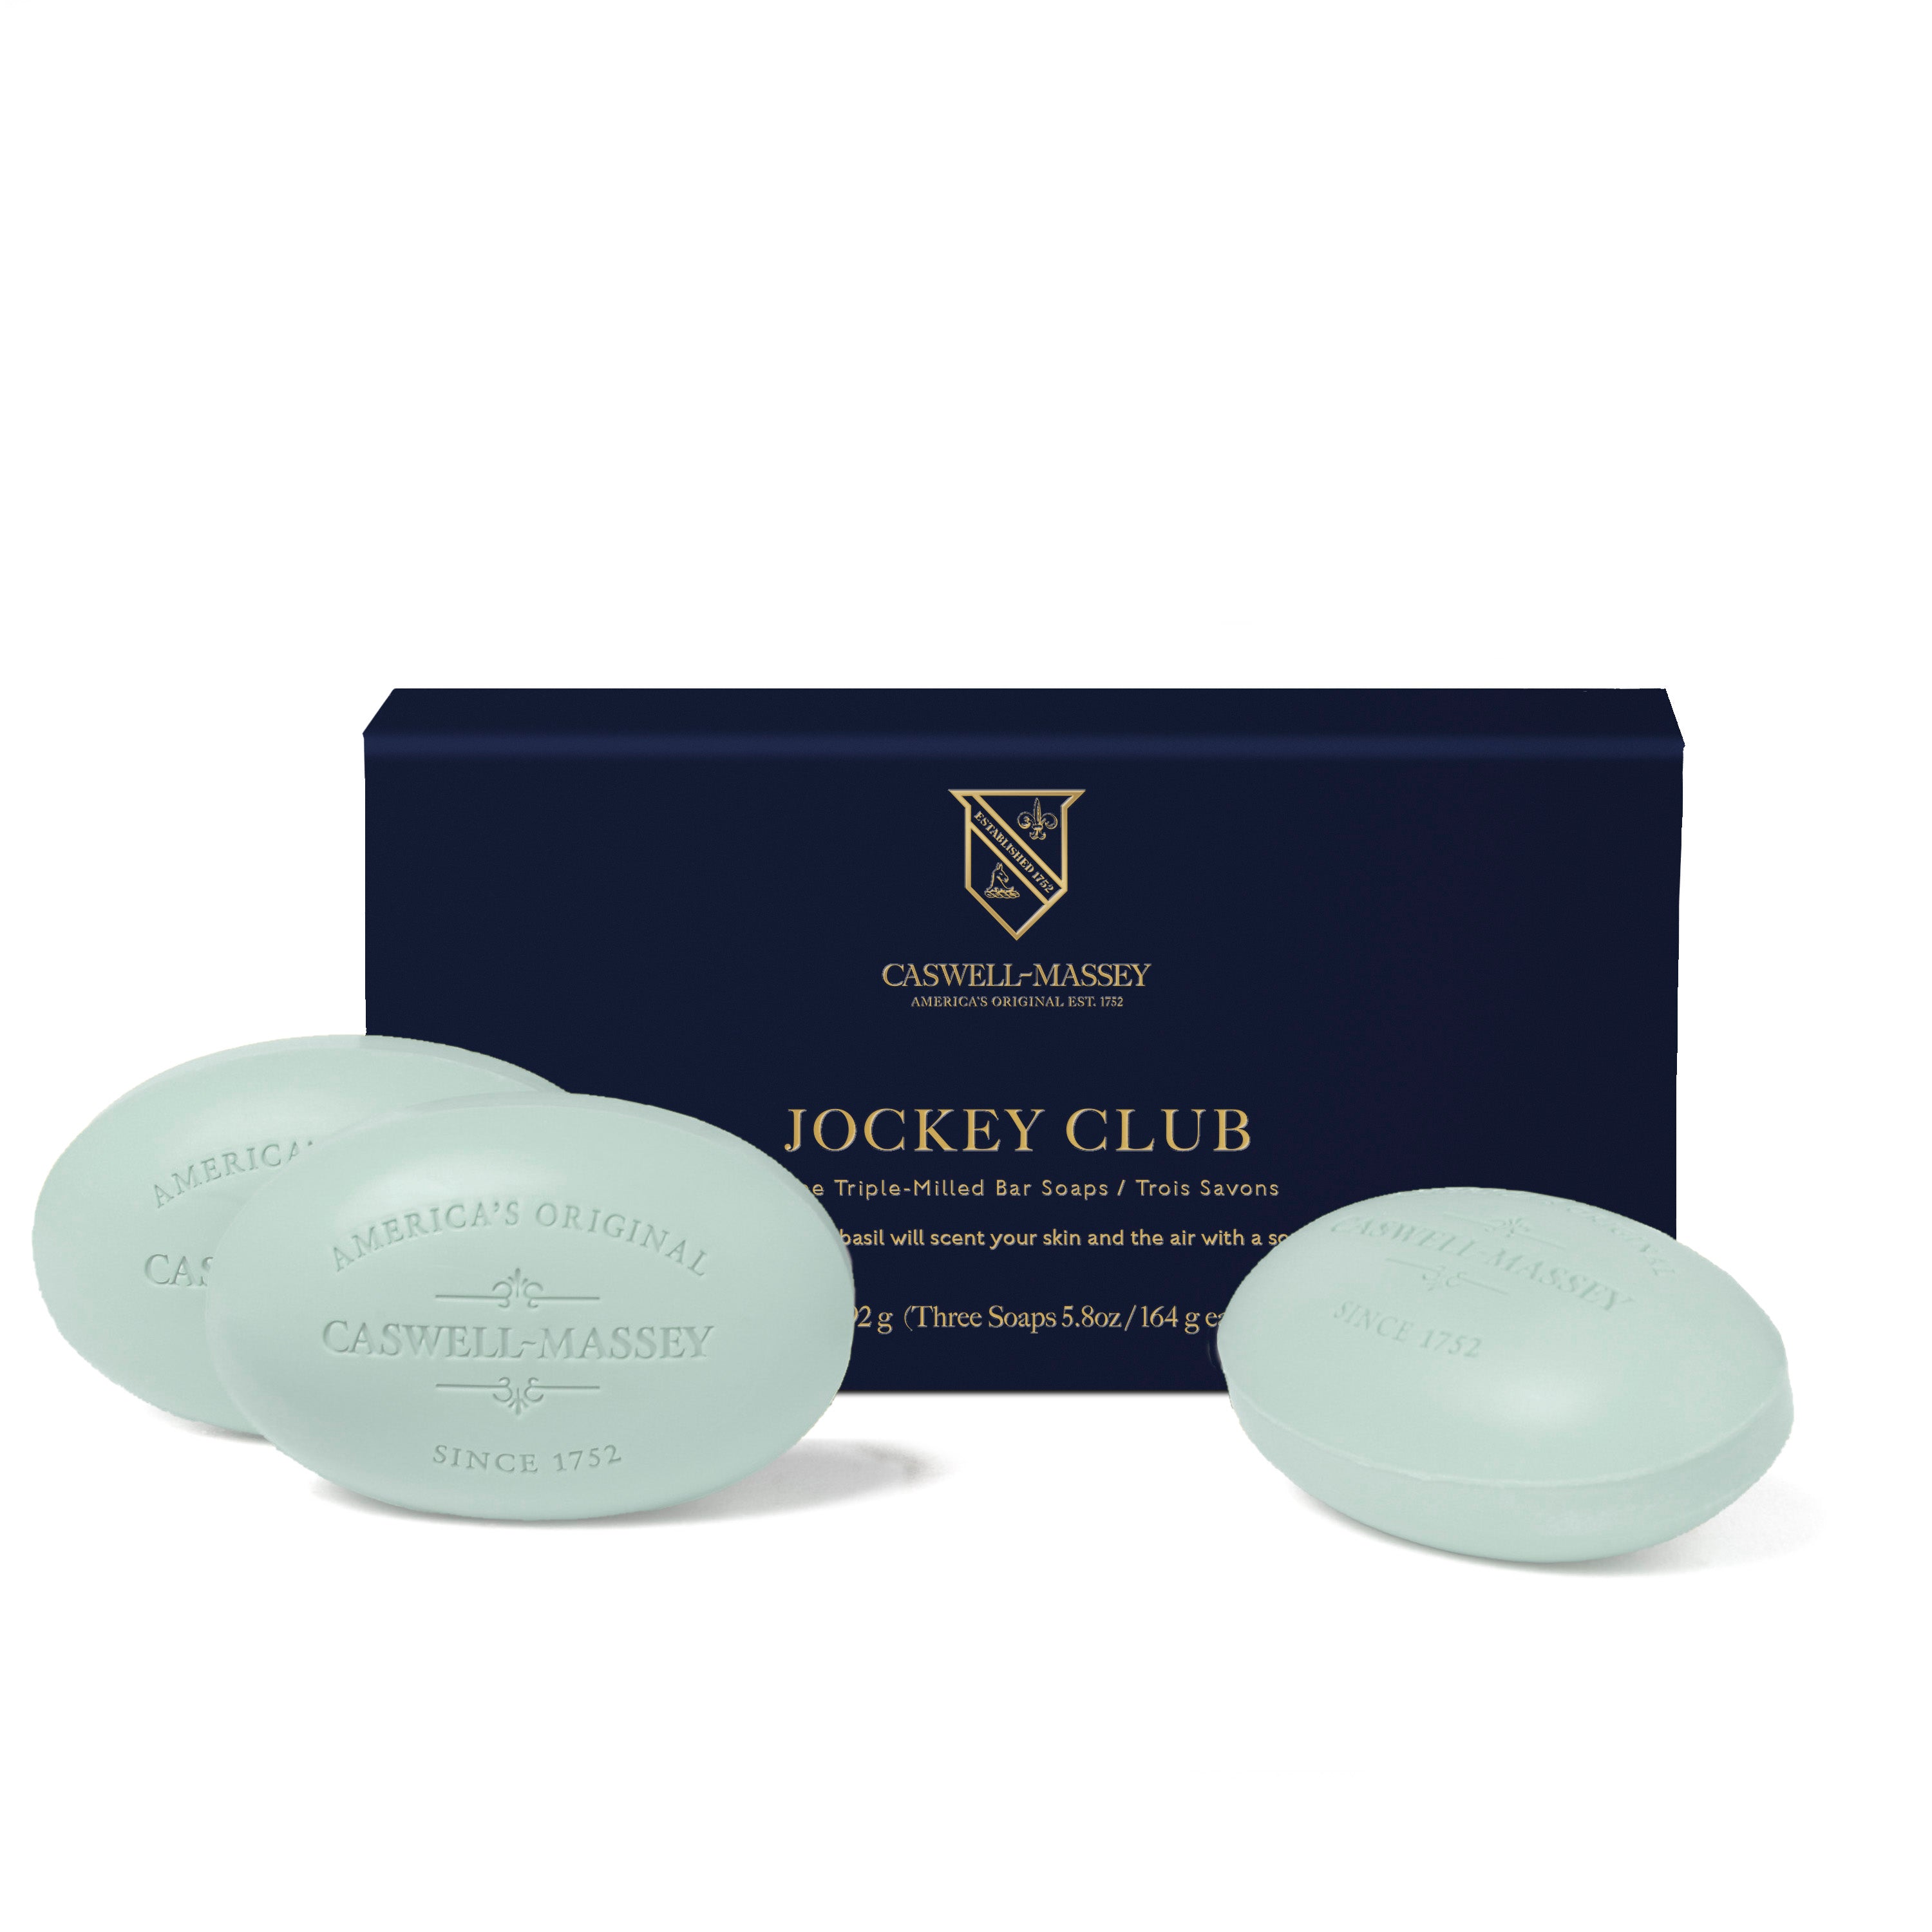 Caswell-Massey® Heritage Jockey Club 3-Soap shown alongside navy gift box